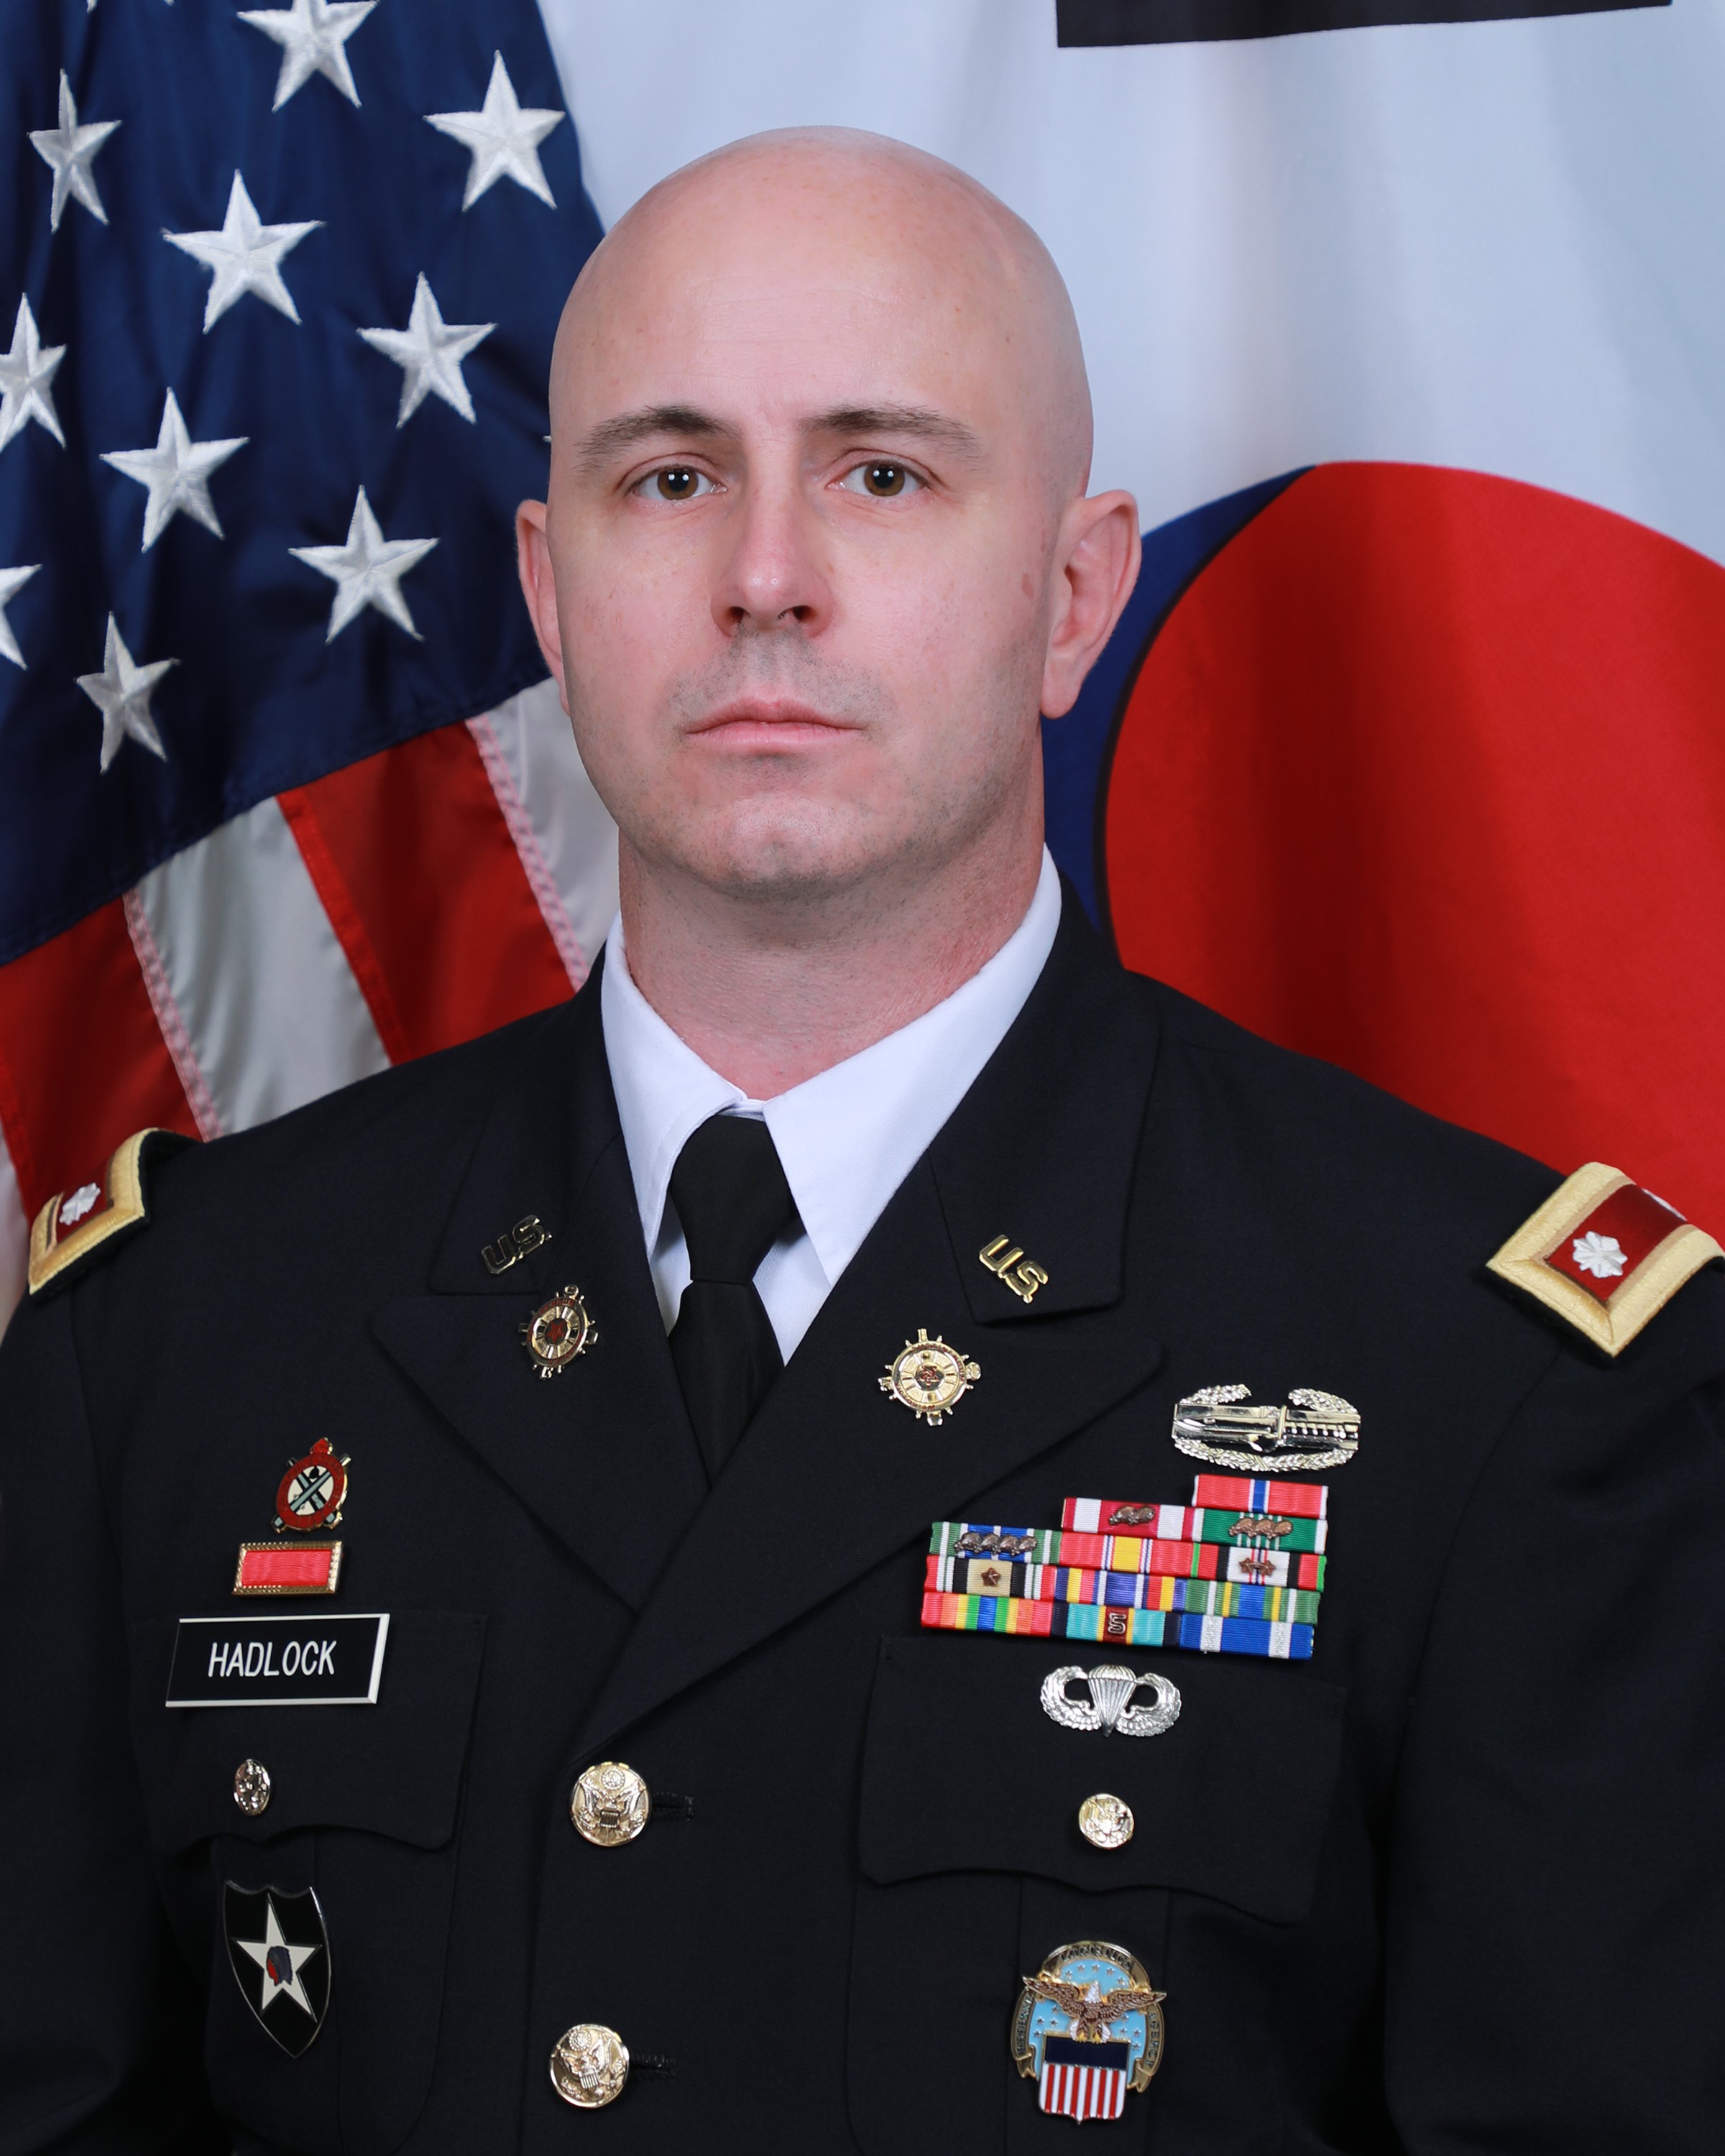 Nathan L. Hadlock, LTC, USA, Commander